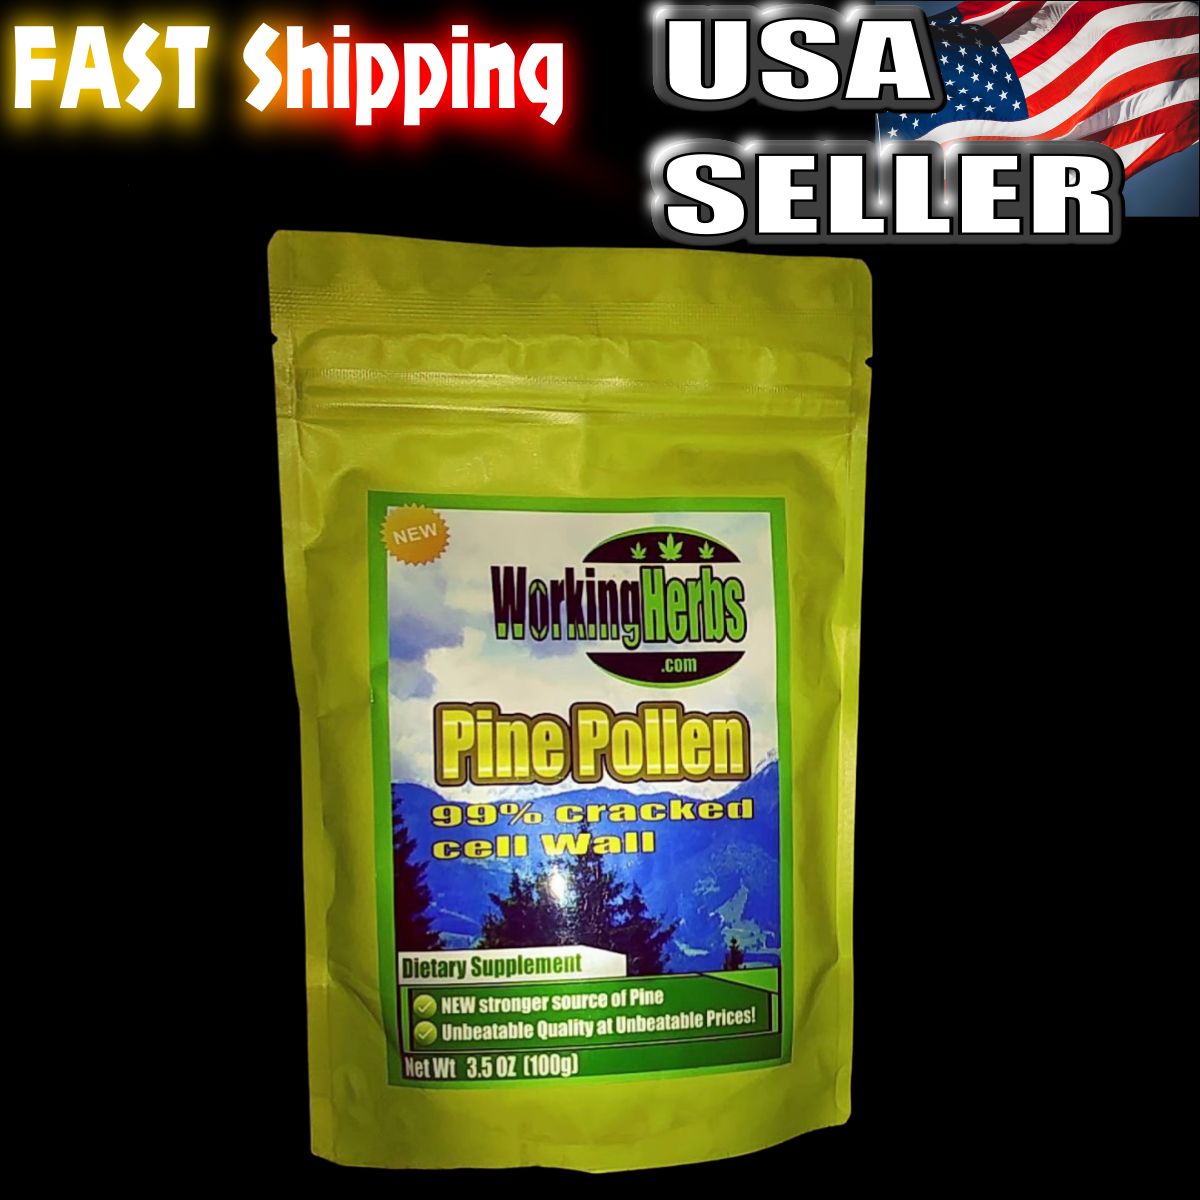 Pine Pollen Powder 100g (3.5 oz) bag 99% Broken Cracked Cell Wall (wild harvested) Organic Testosterone BOOSTER!